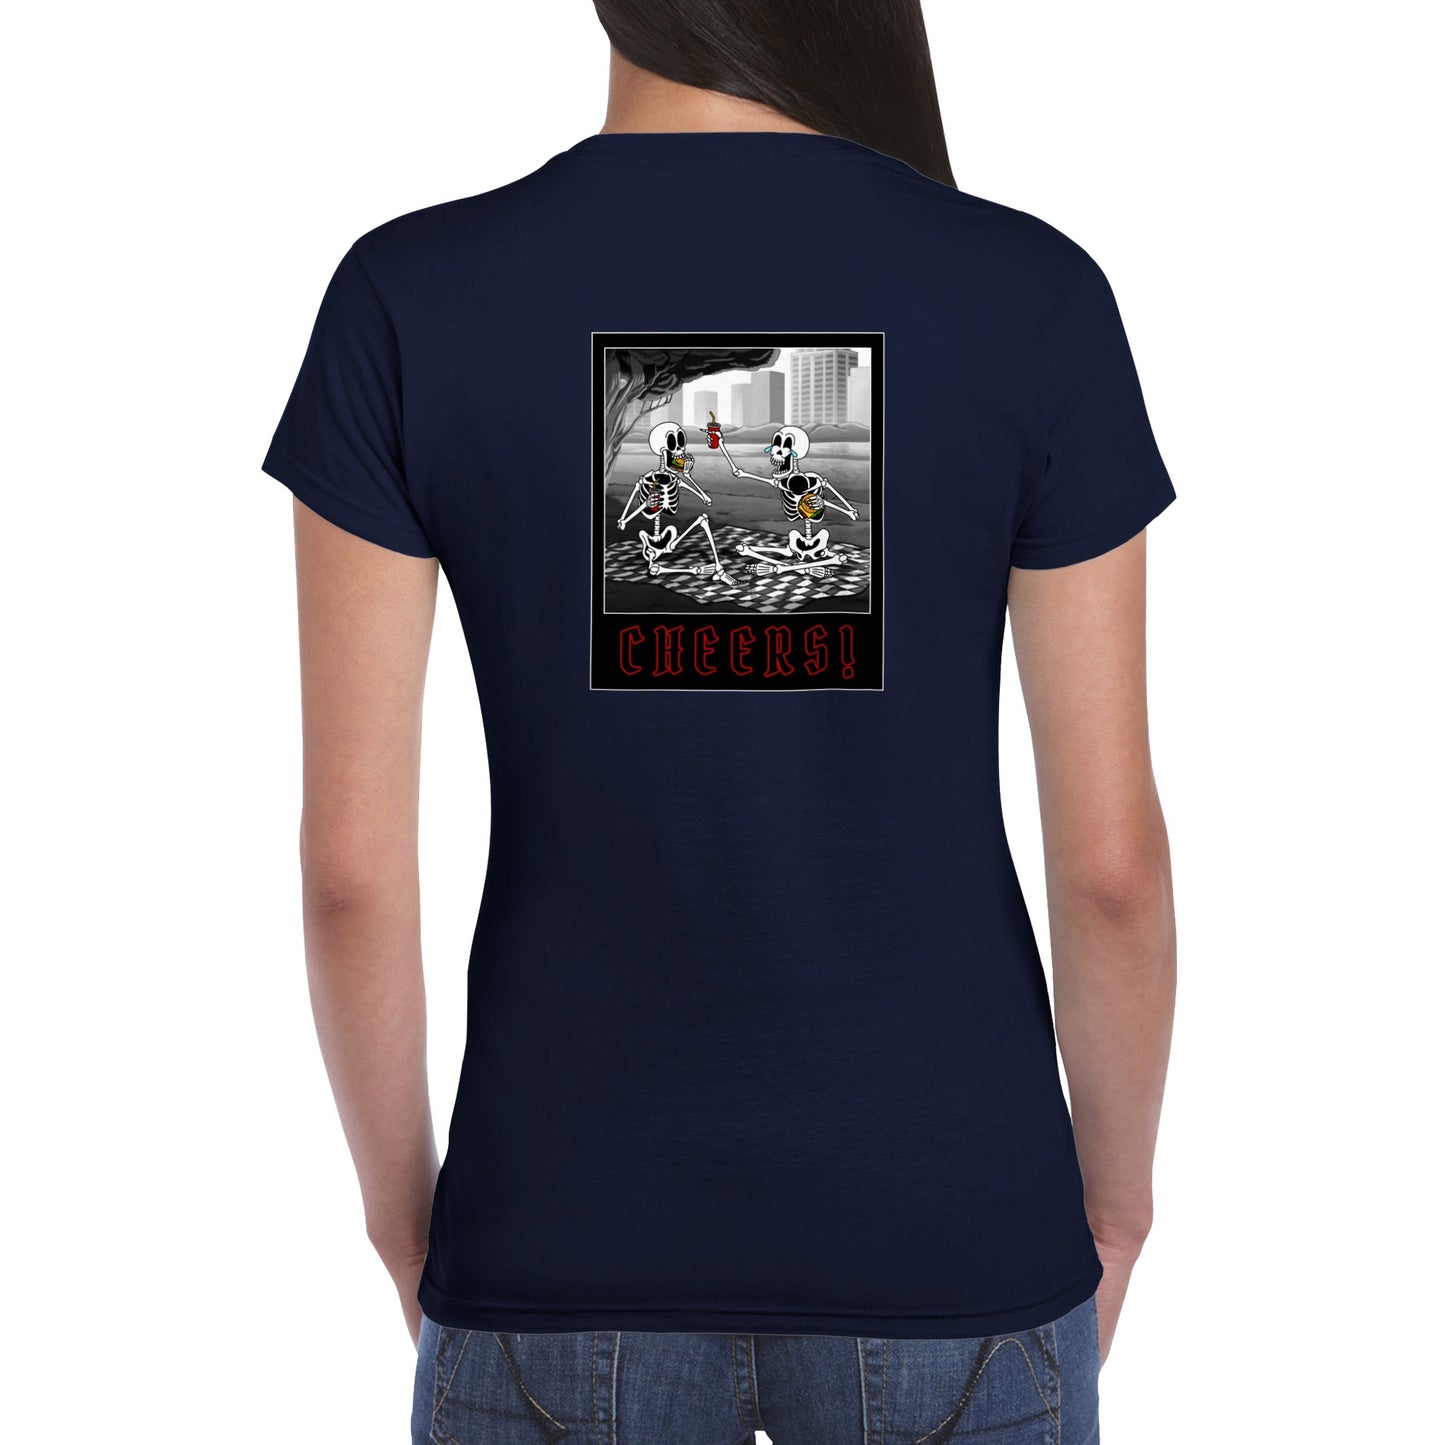 Bones Collection - Cheers - Classic Womens Crewneck T-shirt